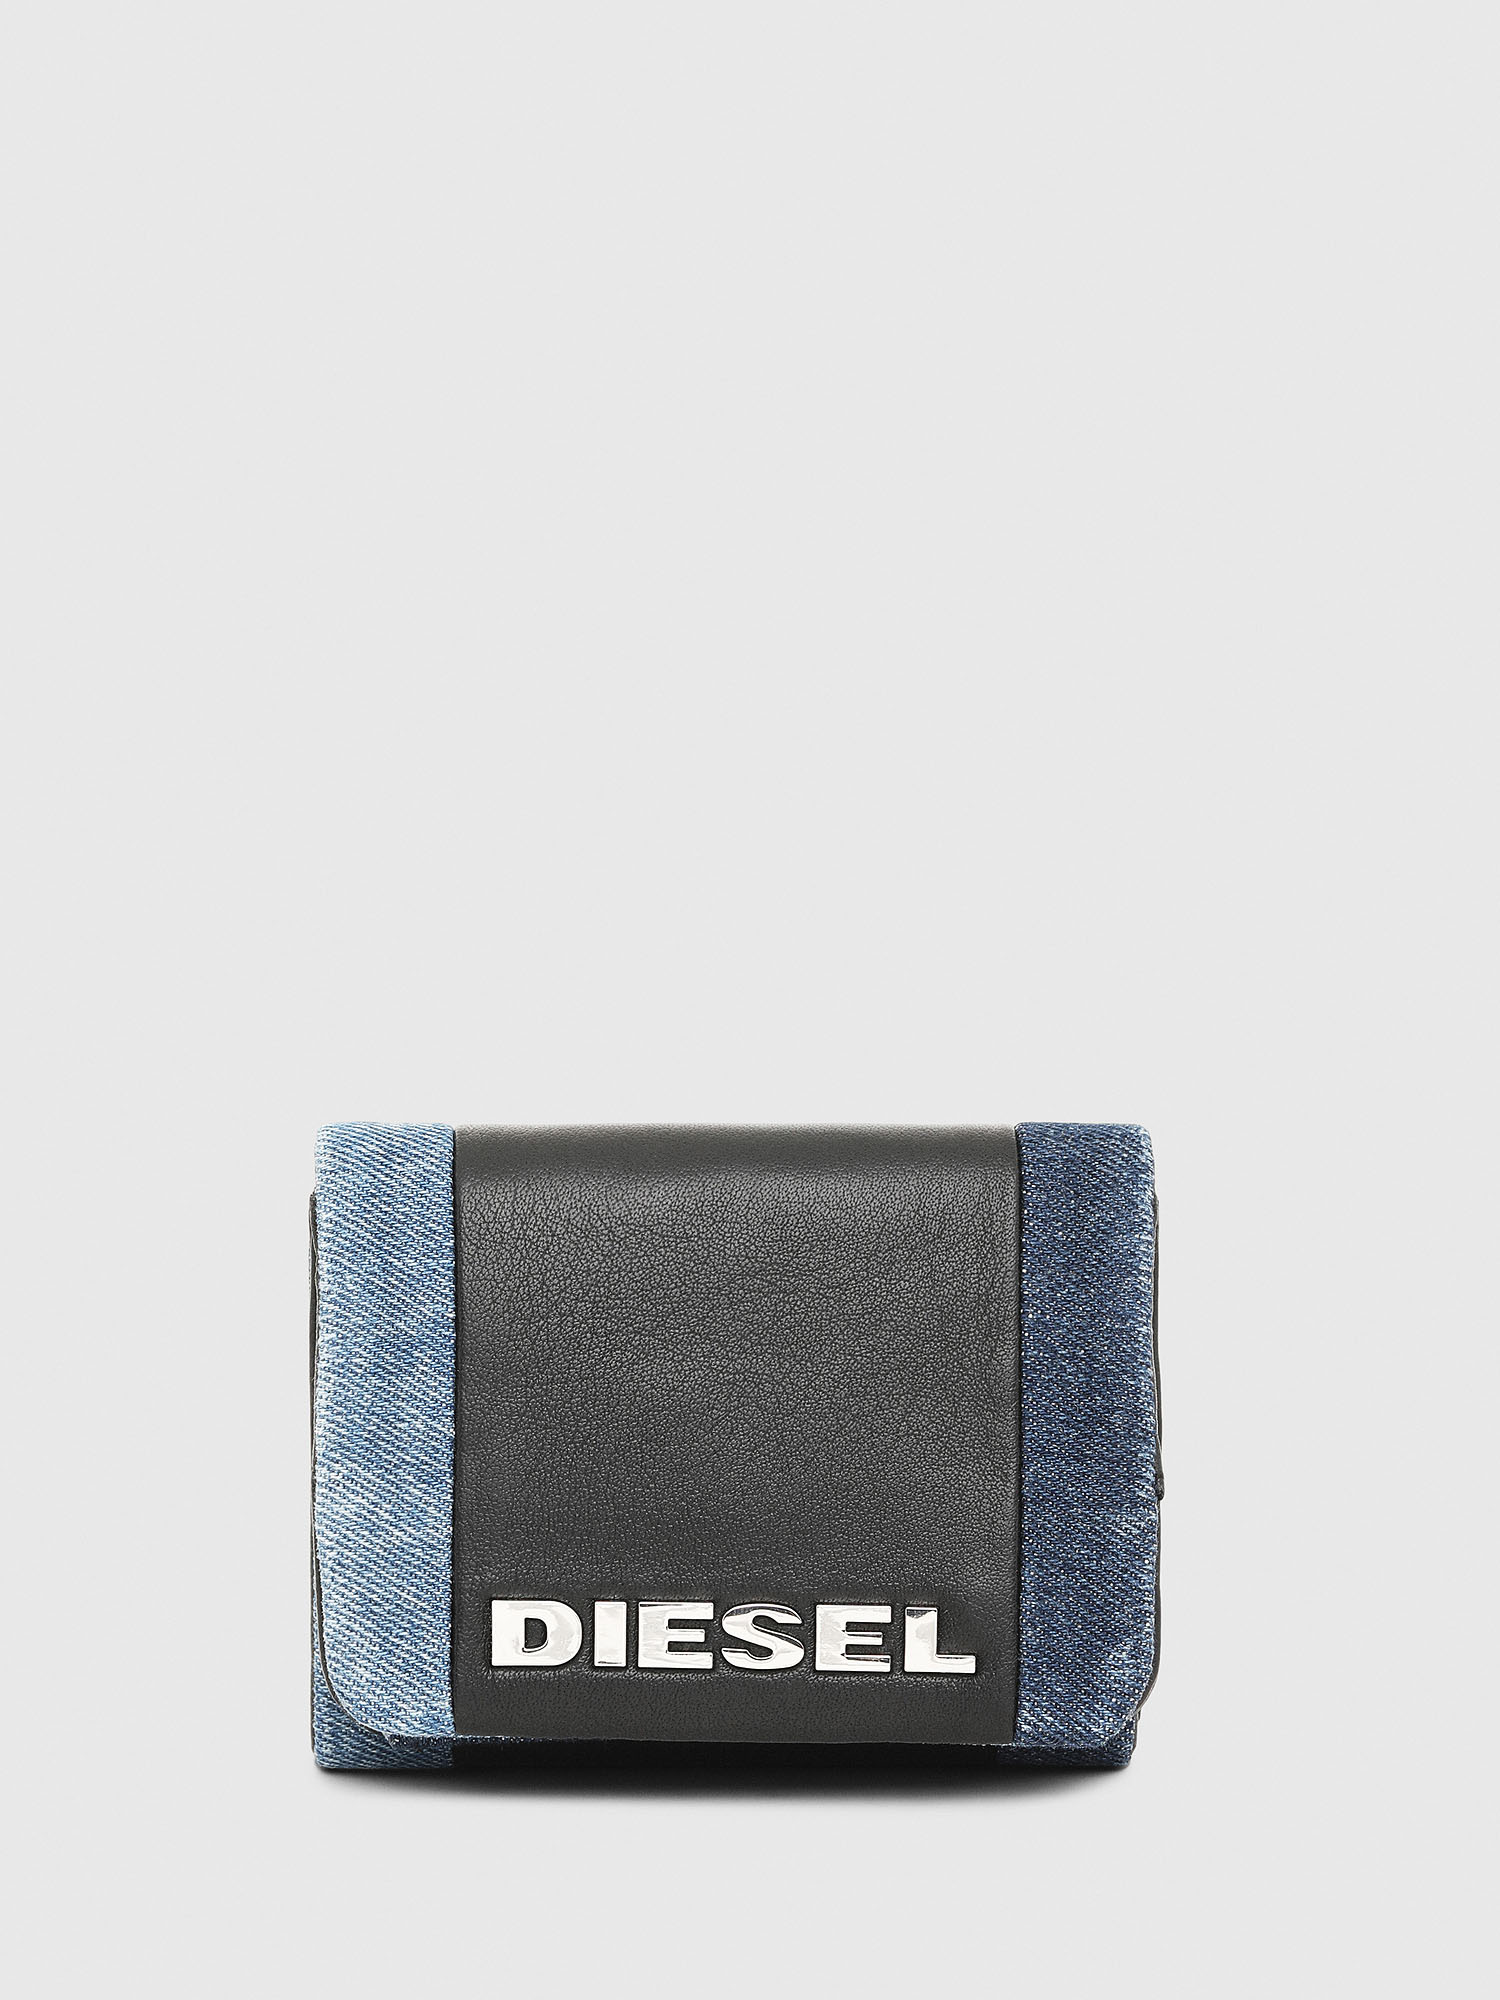 Diesel - LORETTA, Black/Blue - Image 2